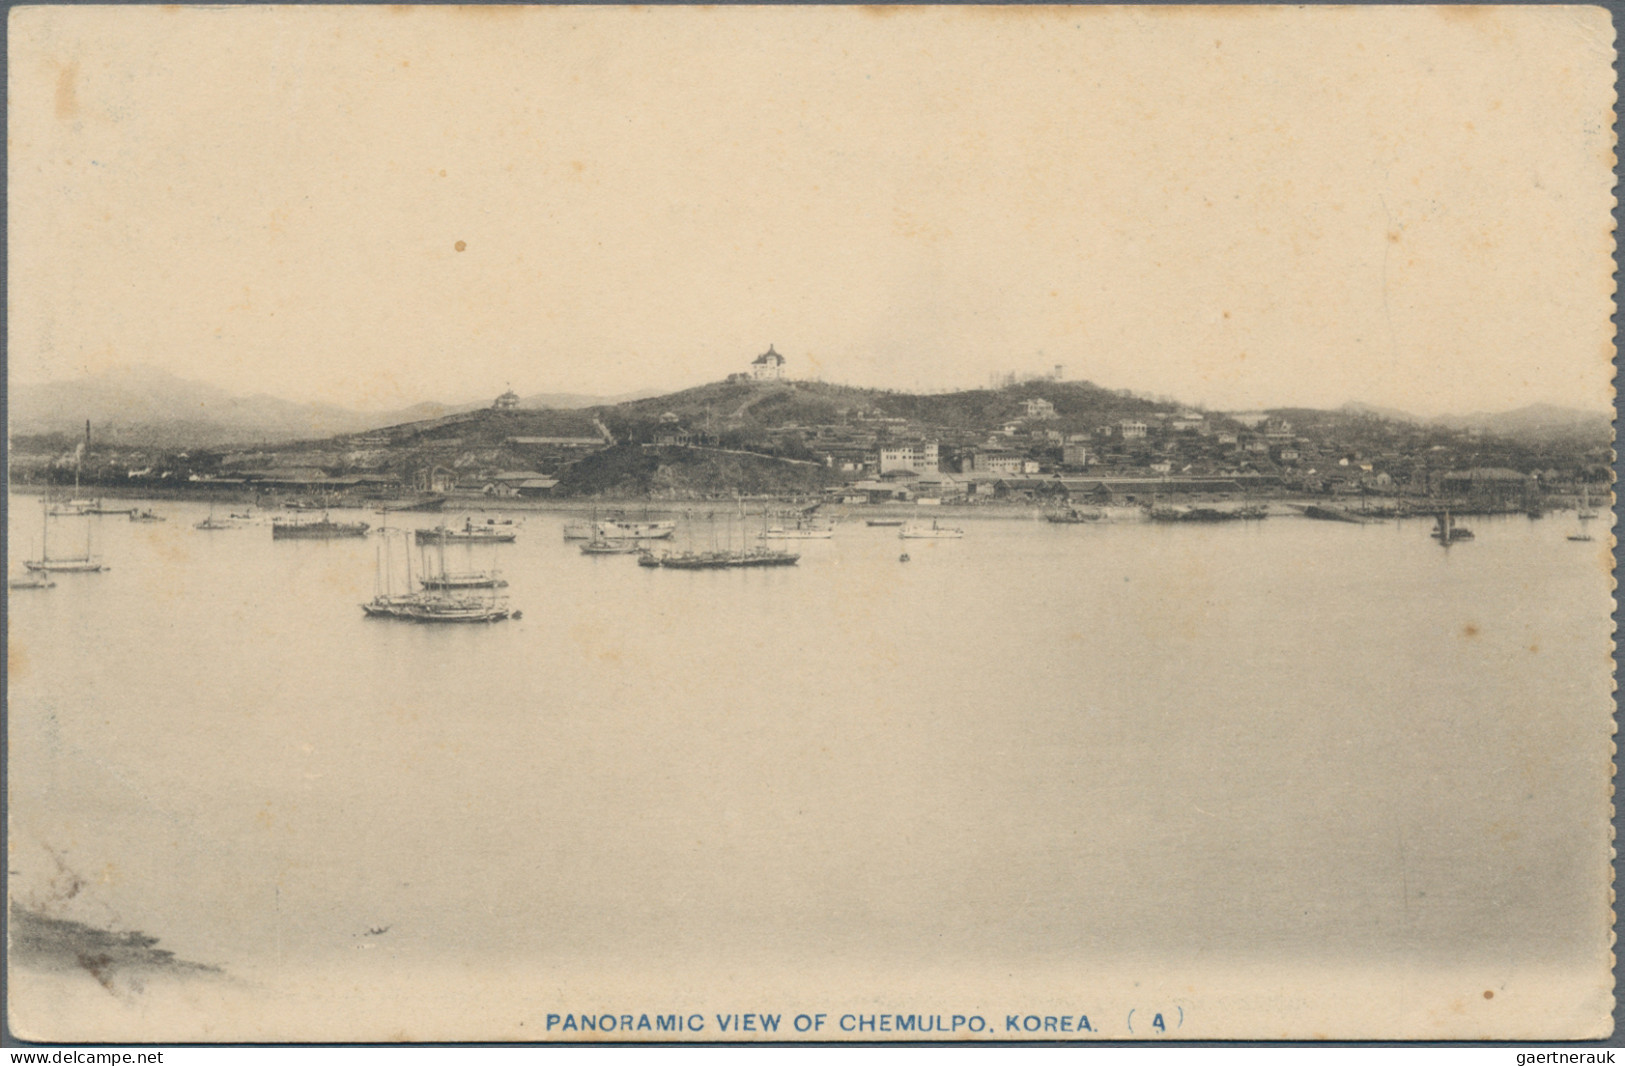 Japanese Post In Corea: 1900/1920s, Picture Postcards (11) Of Chemulpo, Seoul, P - Militärpostmarken